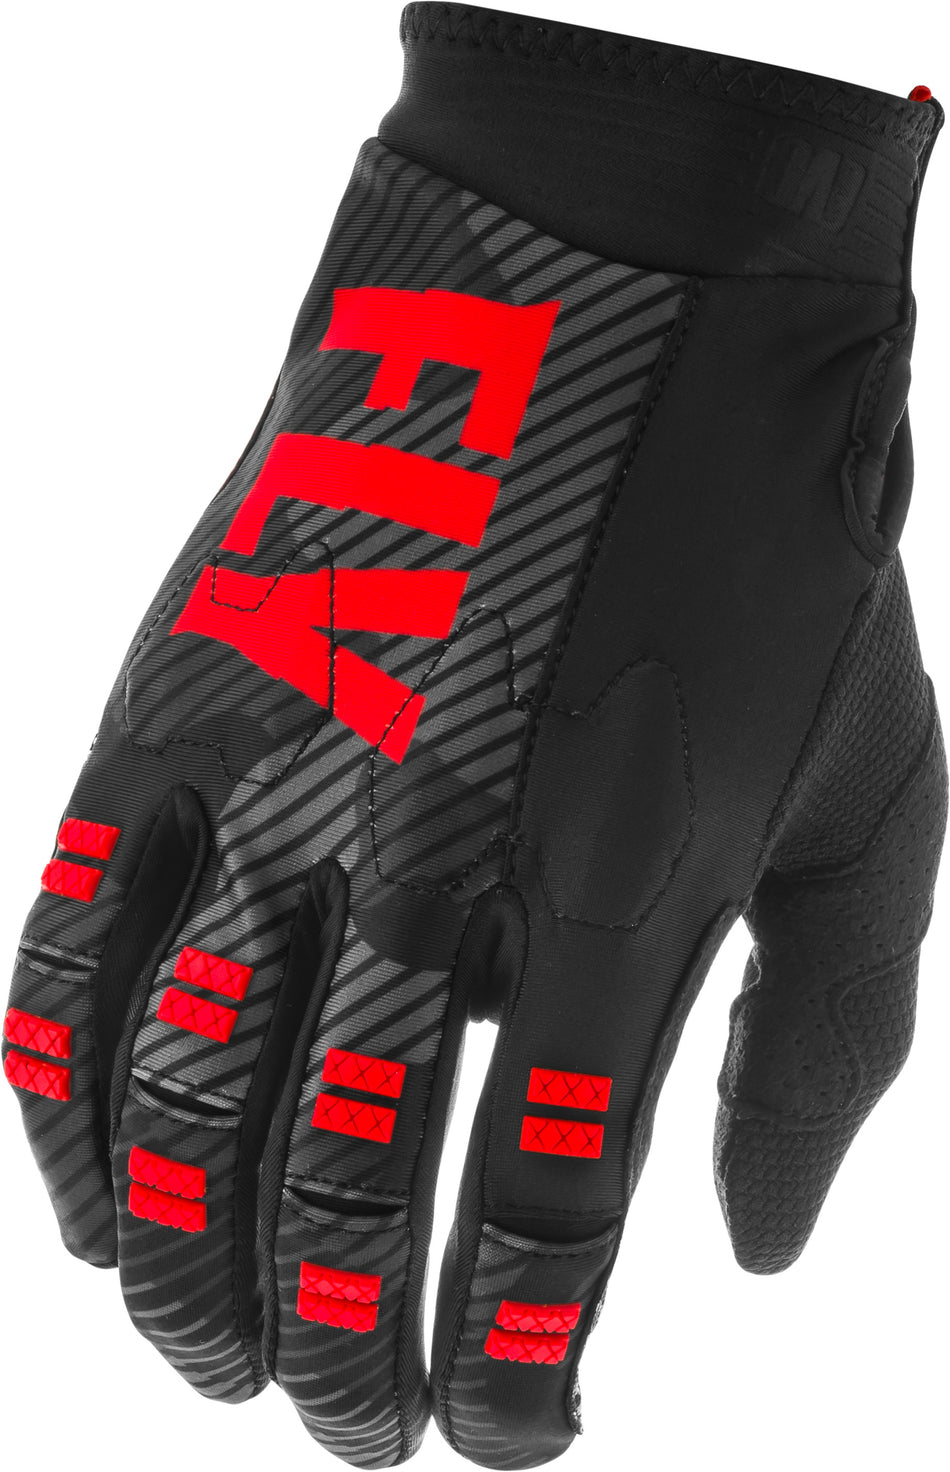 FLY RACING Evolution Gloves Red/Black Sz 11 373-11211